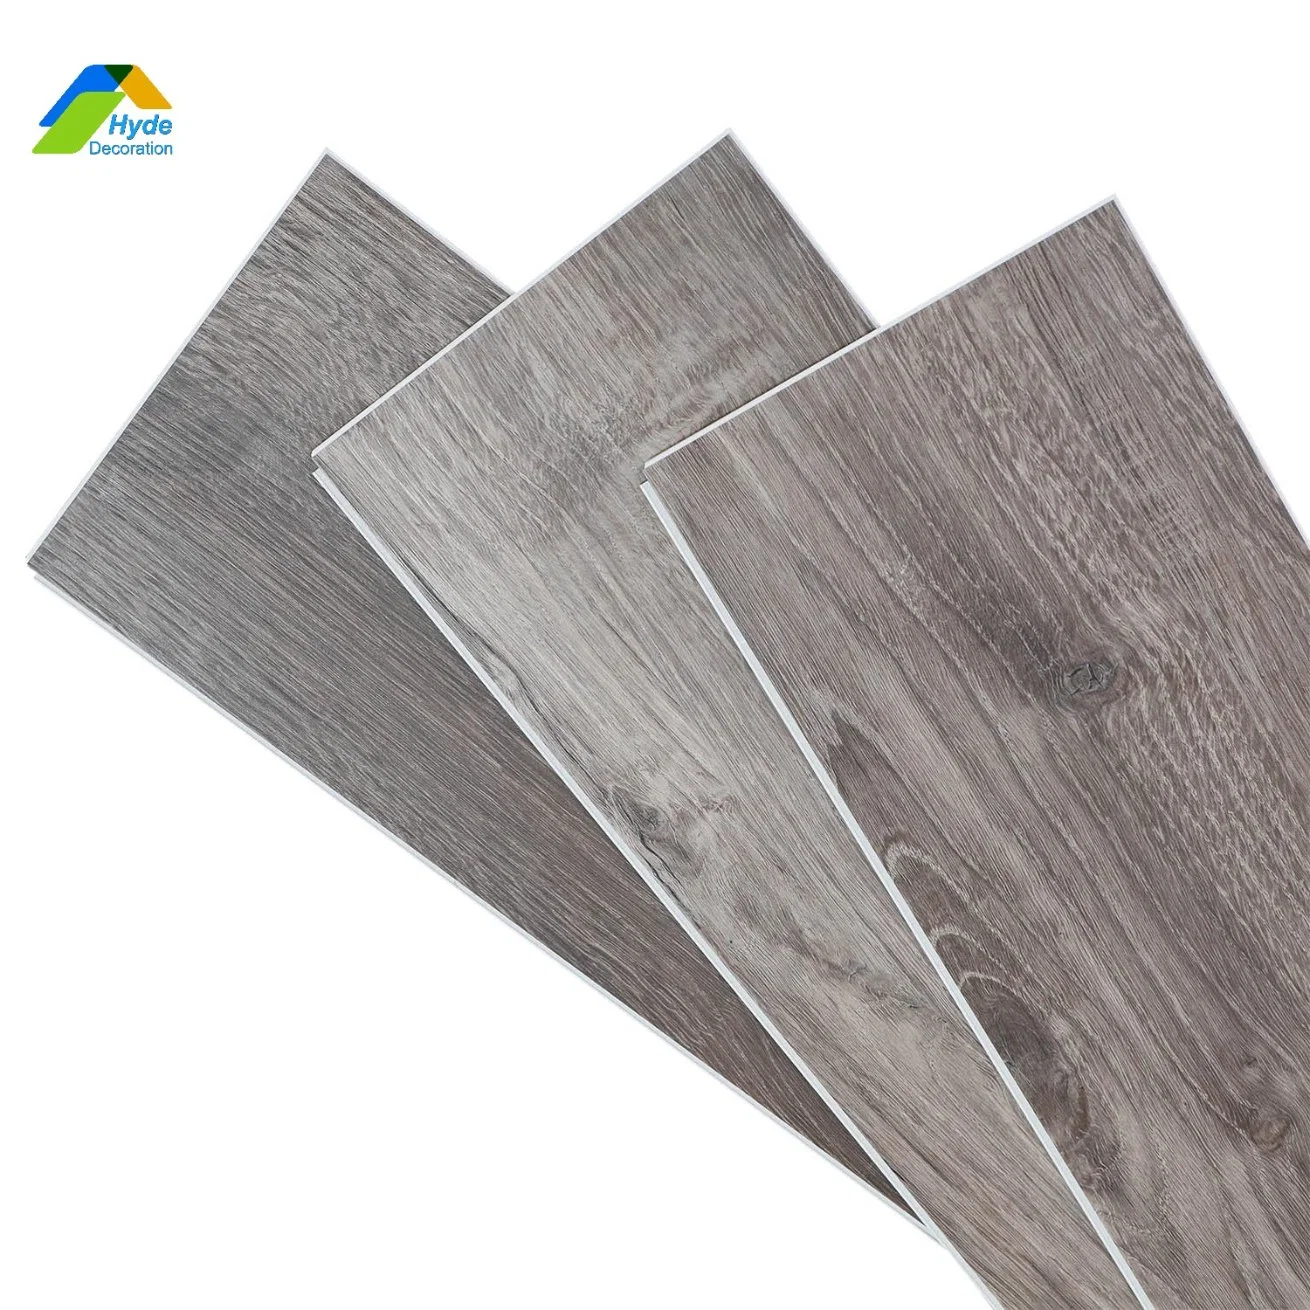 Wholesale/Supplier 4mm Water Proof PVC Linoleum Flooring Interlocking Spc Vinyl Wood Plank Tile